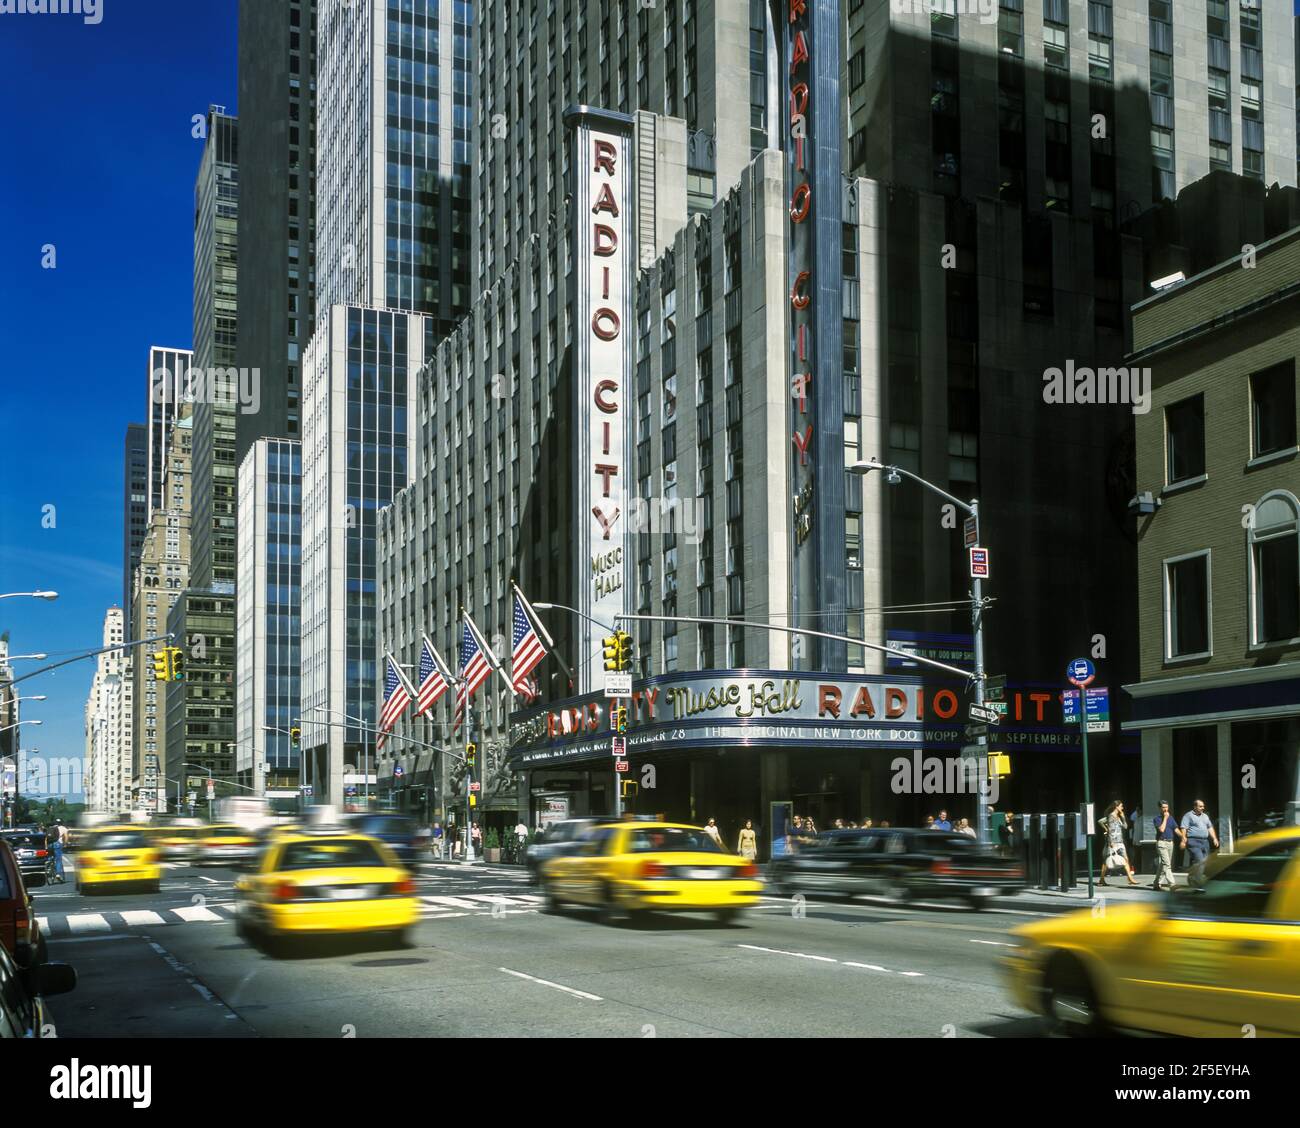 2002 HISTORICAL YELLOW TAXI CABS (©FORD MOTOR CO 2000) RADIO CITY MUSIC HALL (©EDWARD DURREL STONE 1932) SIXTH AVENUE MANHATTAN NEW YORK CITY USA Stock Photo